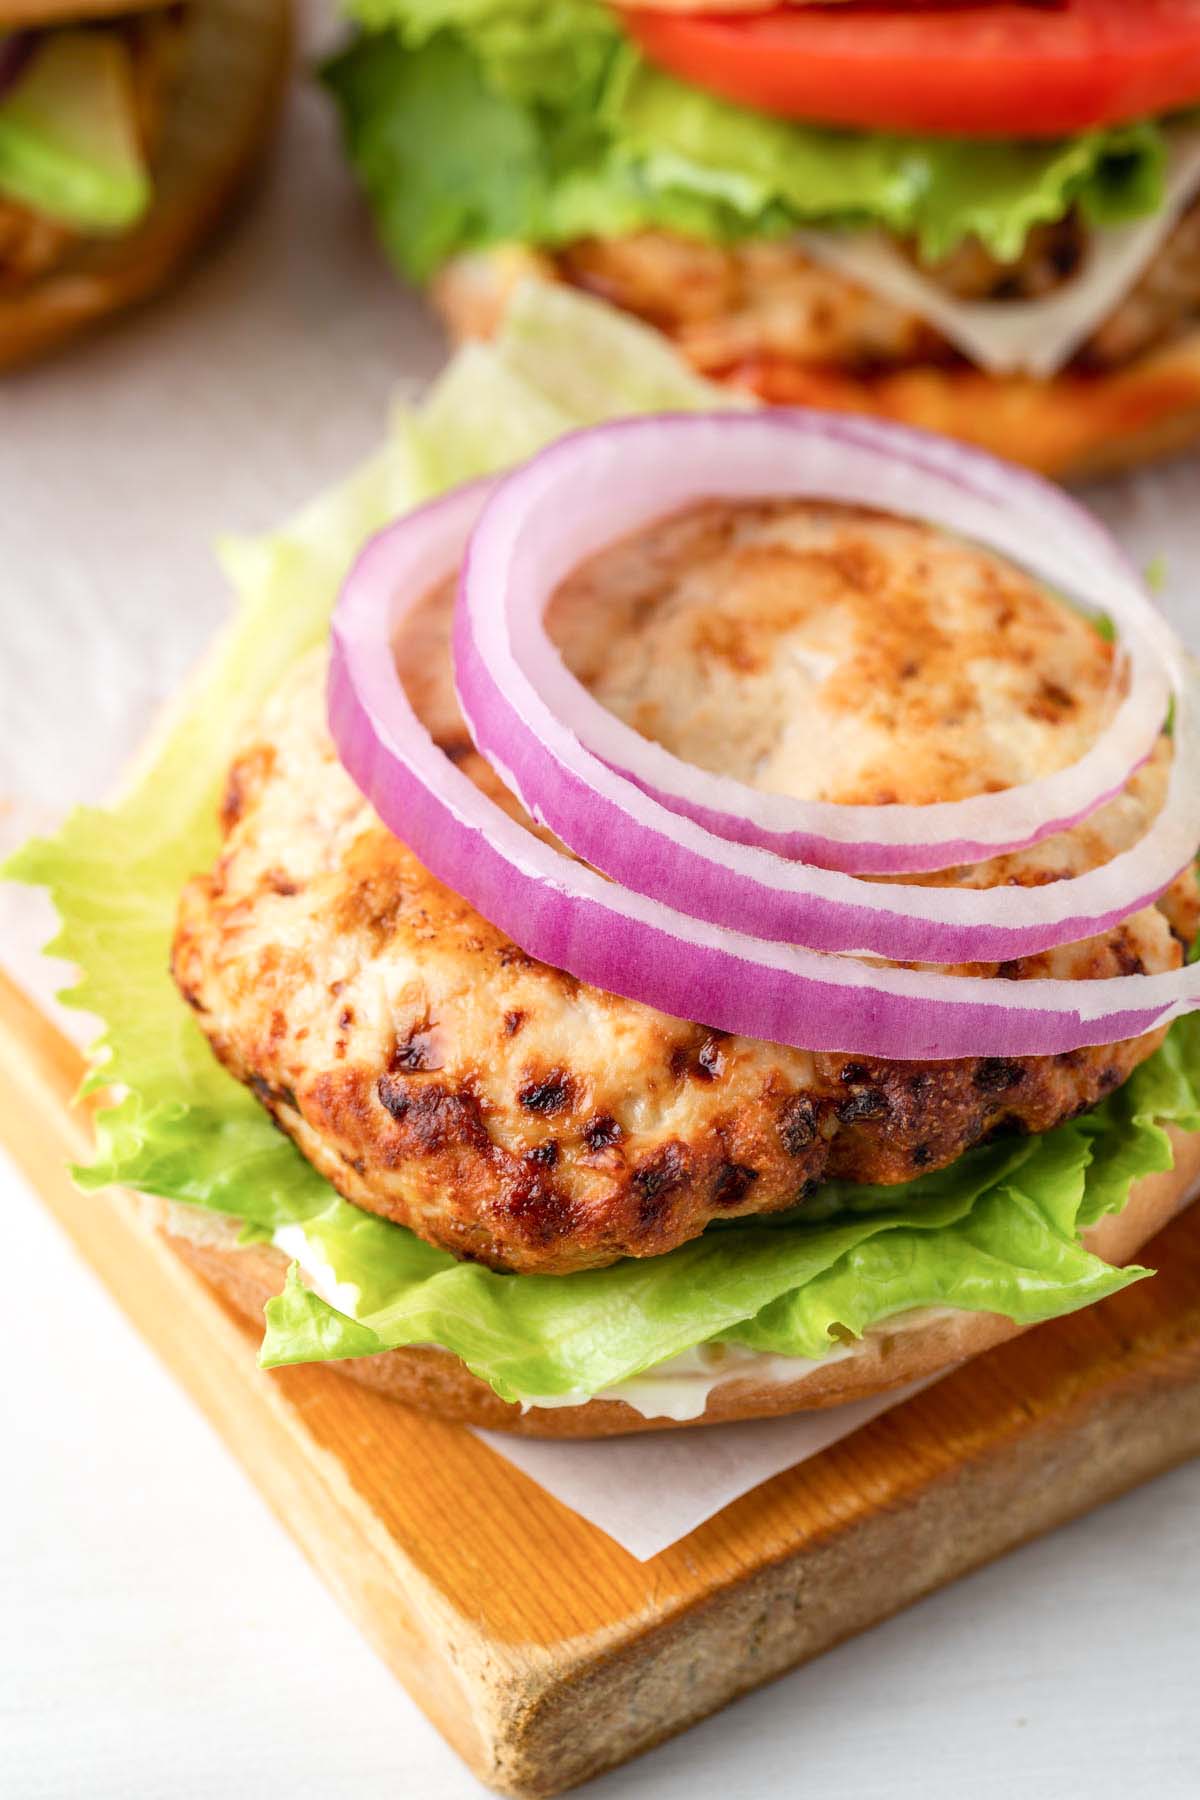 Turkey burger patty on a bottom bun with lettuce and onion.